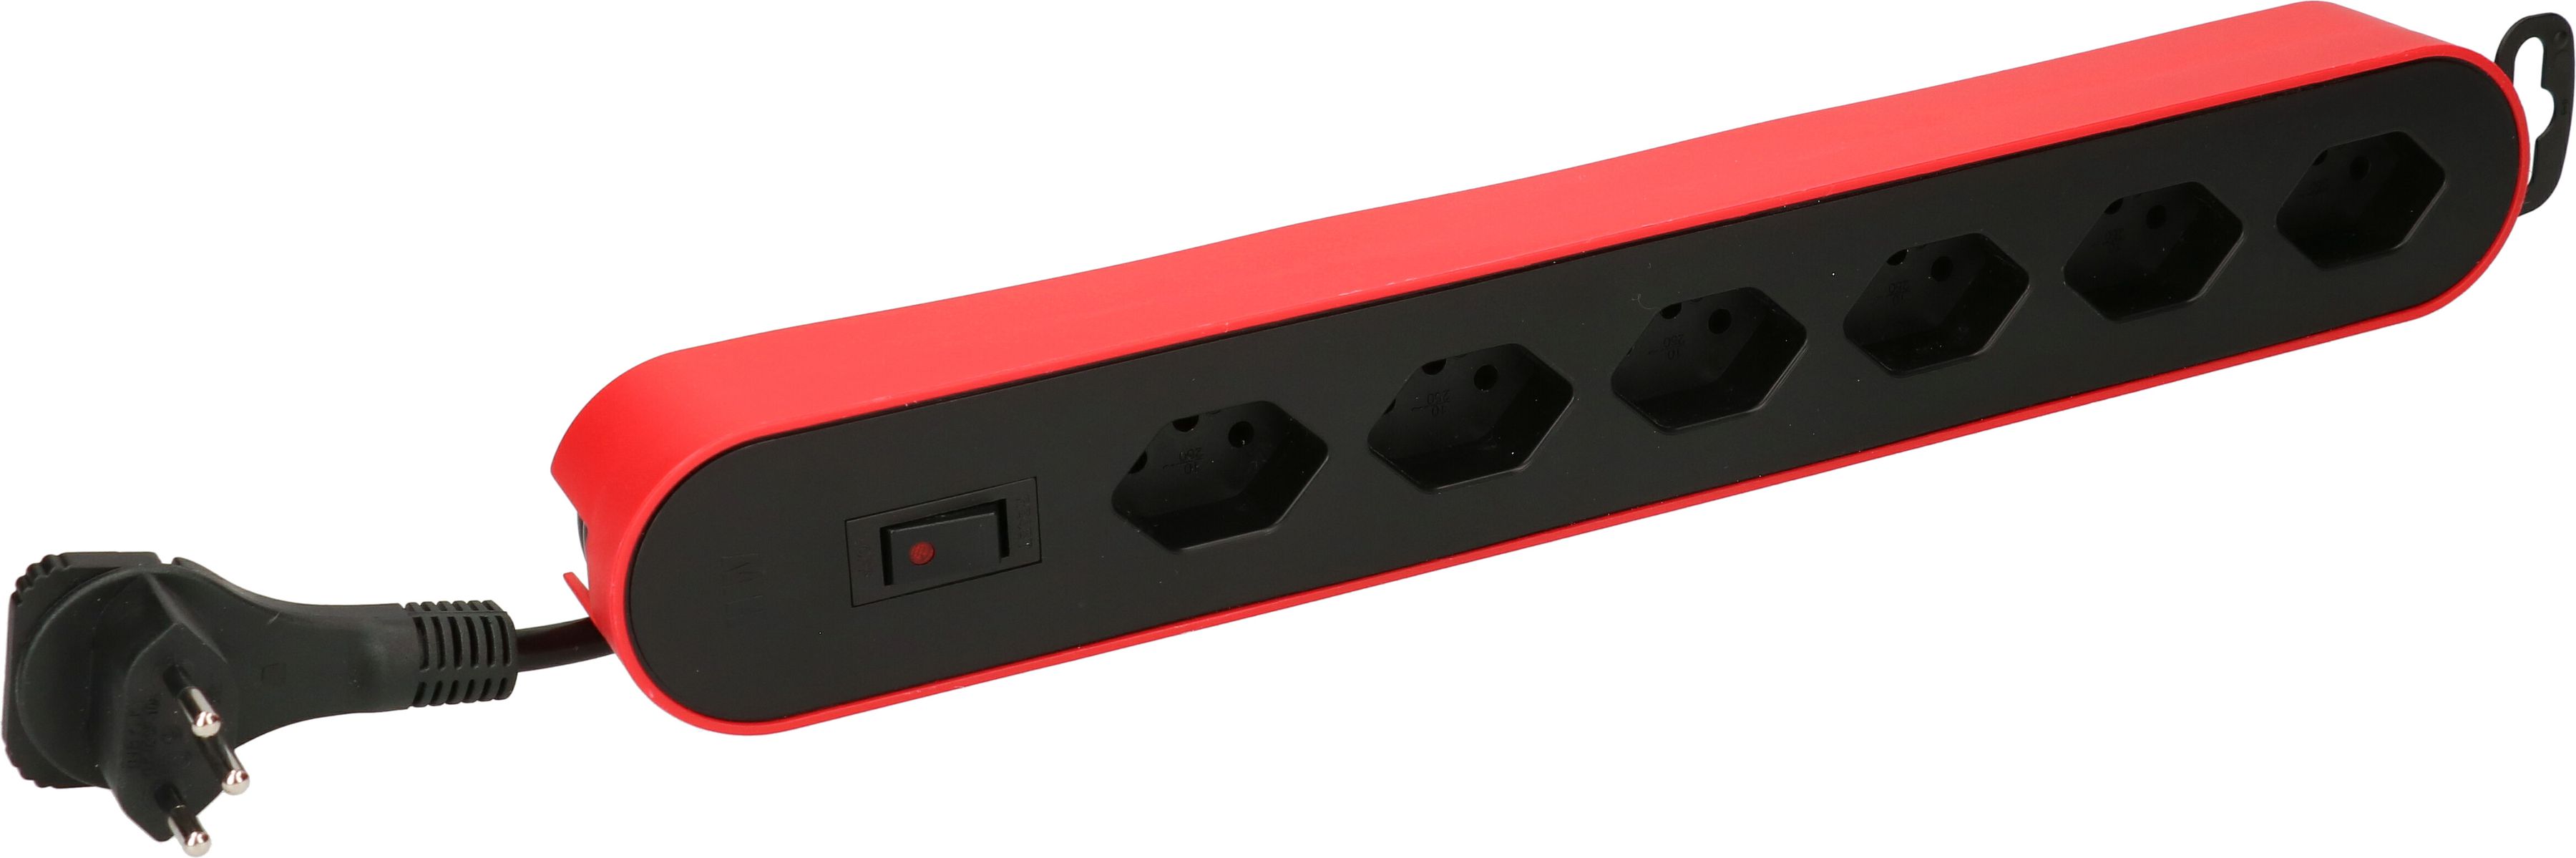 multiprise Design Line 6x type 13 rouge/noir interrupt. 2.2m plat